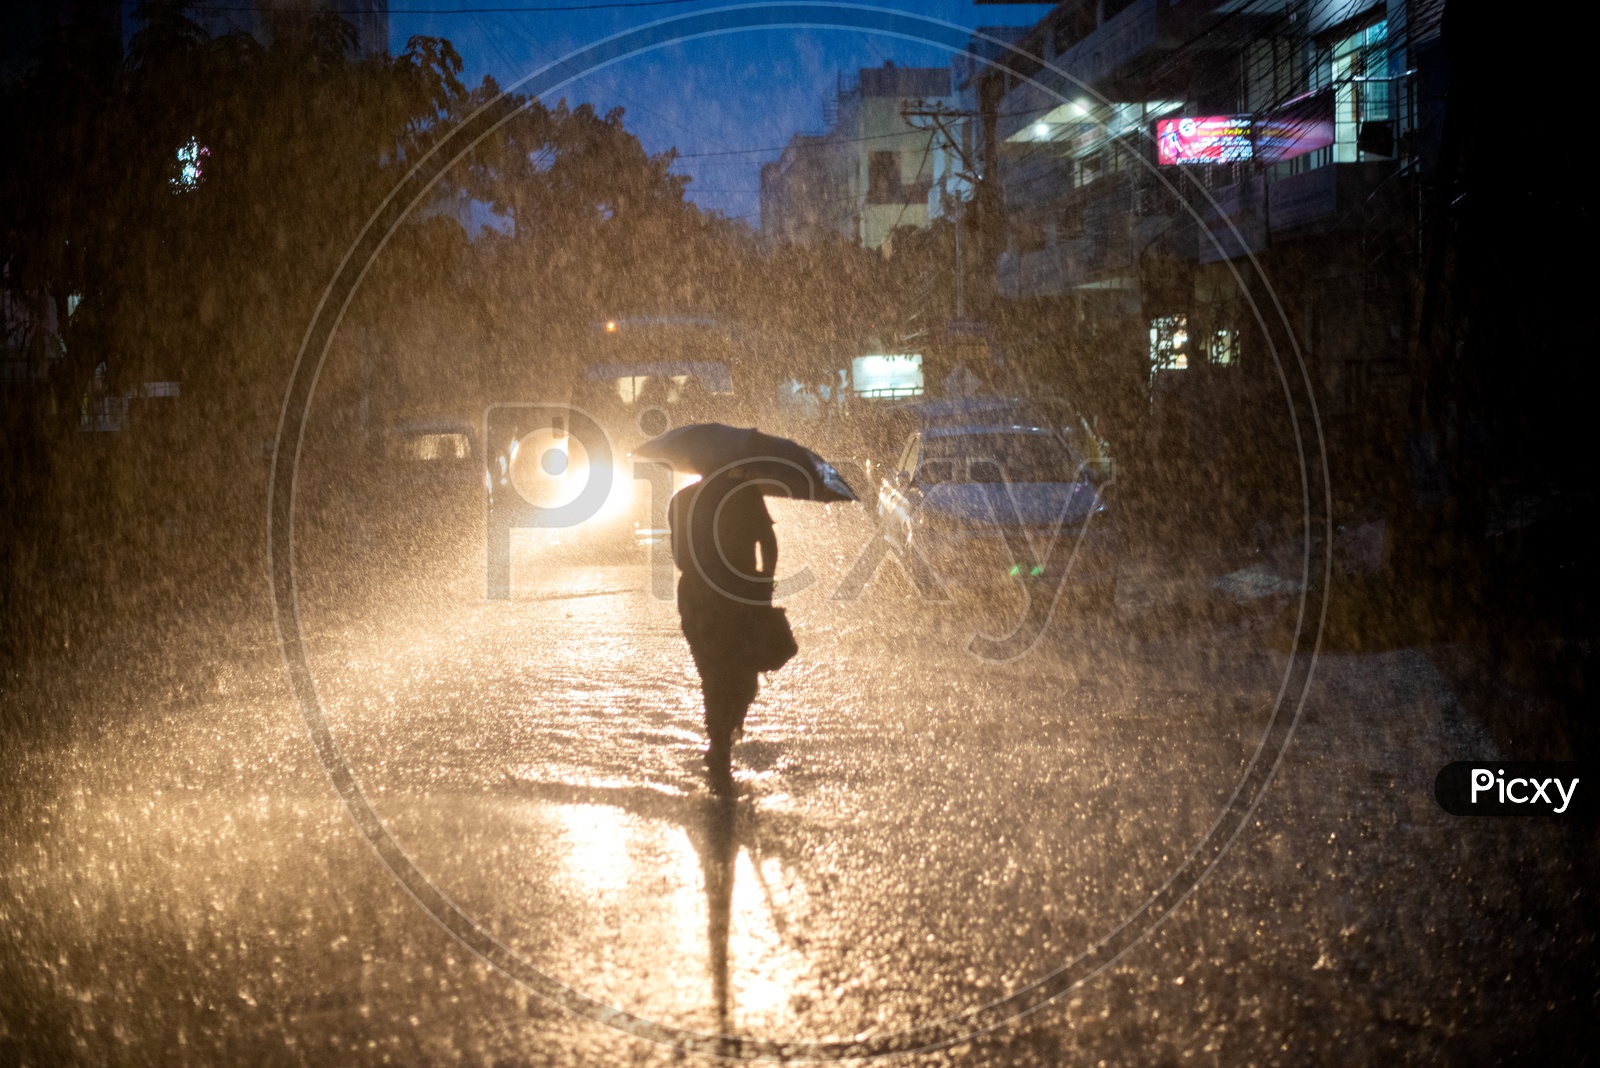 Woman Pedestrian Walking on Flooded Road In Heavy Rain With Umbrella